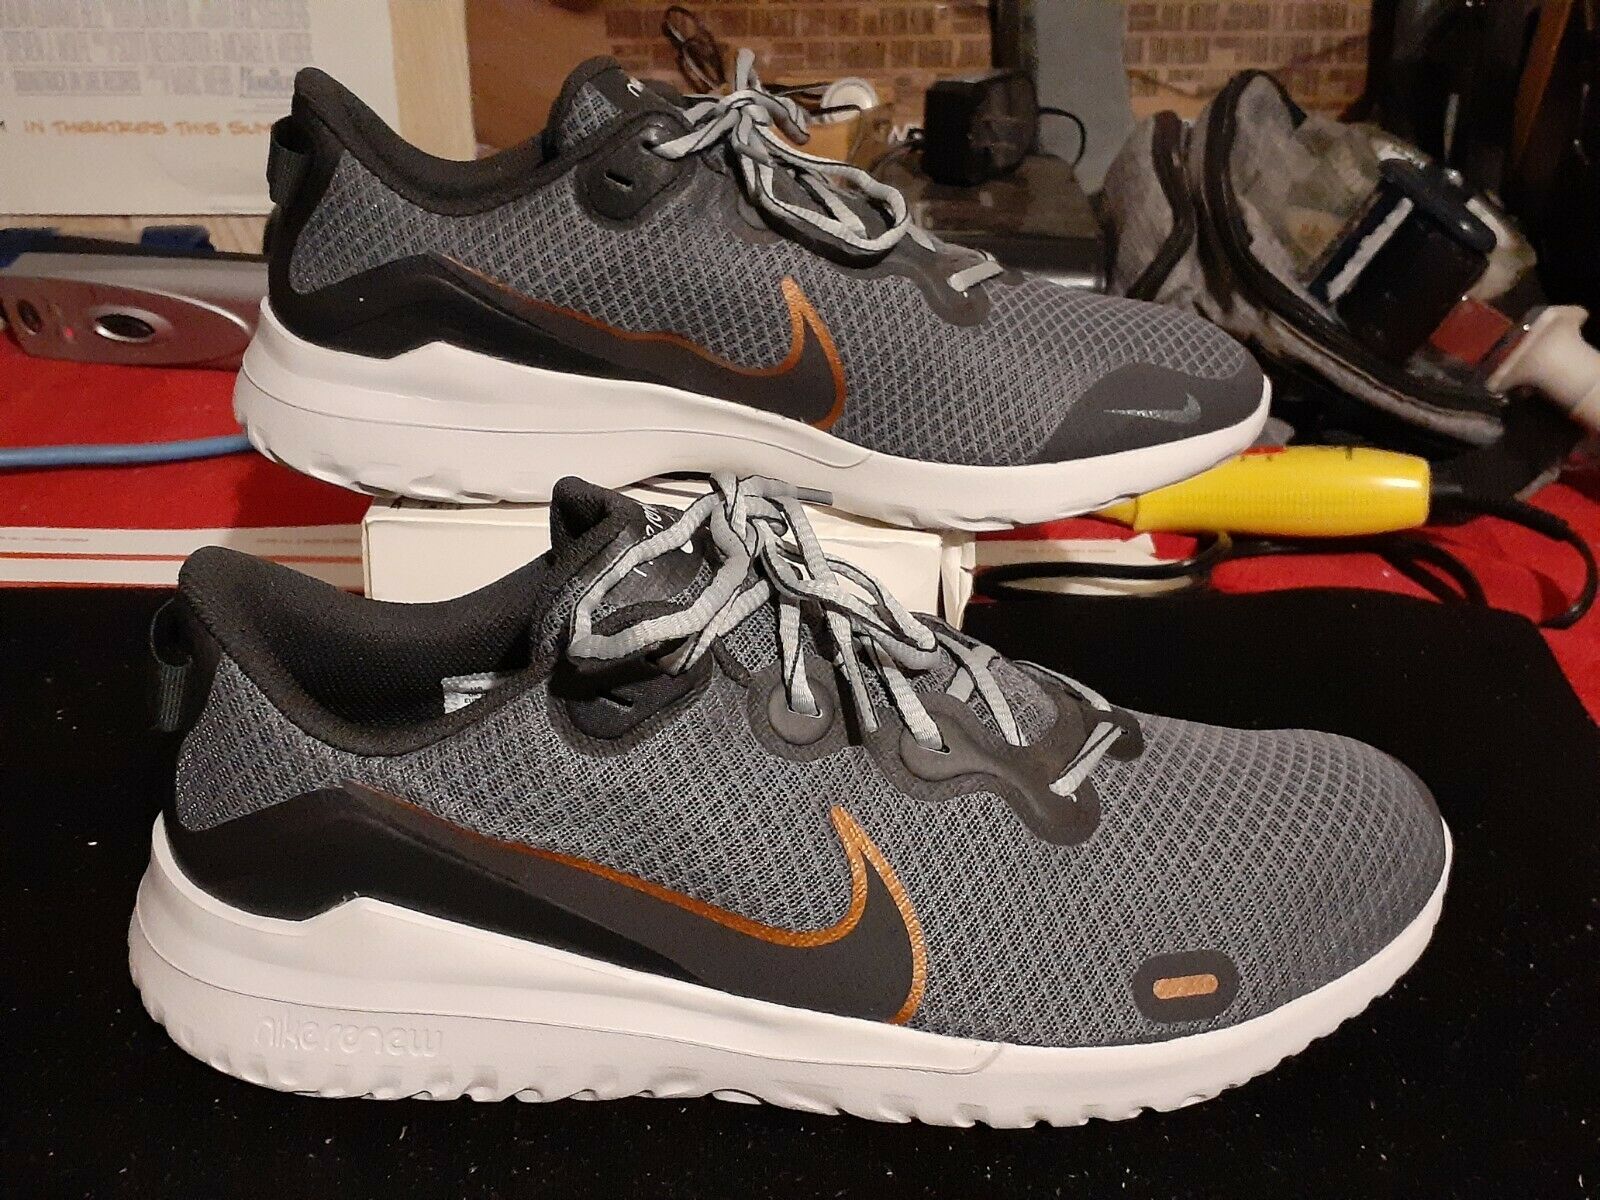 Nike Renew Ride Men's running shoes size 12 Grey Gold Black CD0311-002